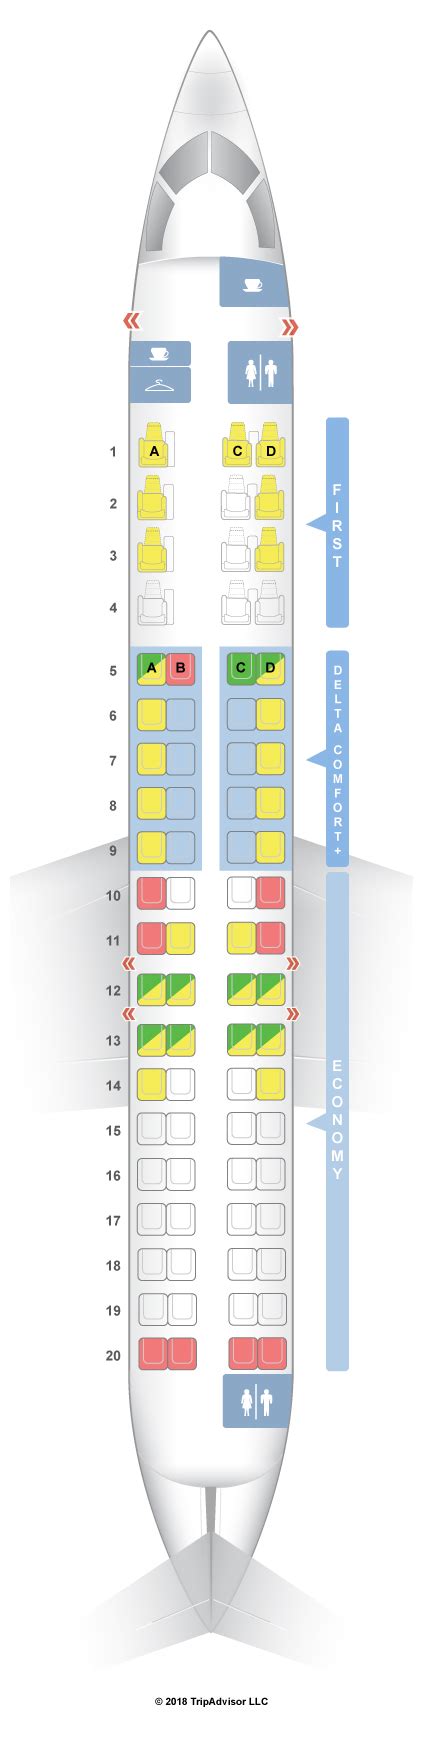 New CRJ9 seating configuration - widebody ... Addit